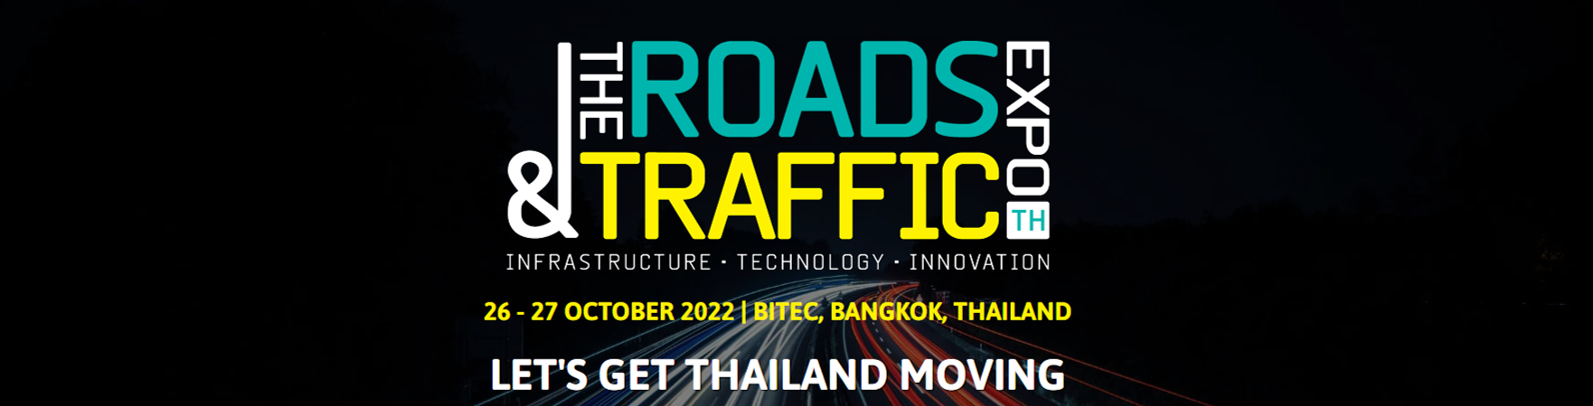 Roads & Traffic Expo 2022